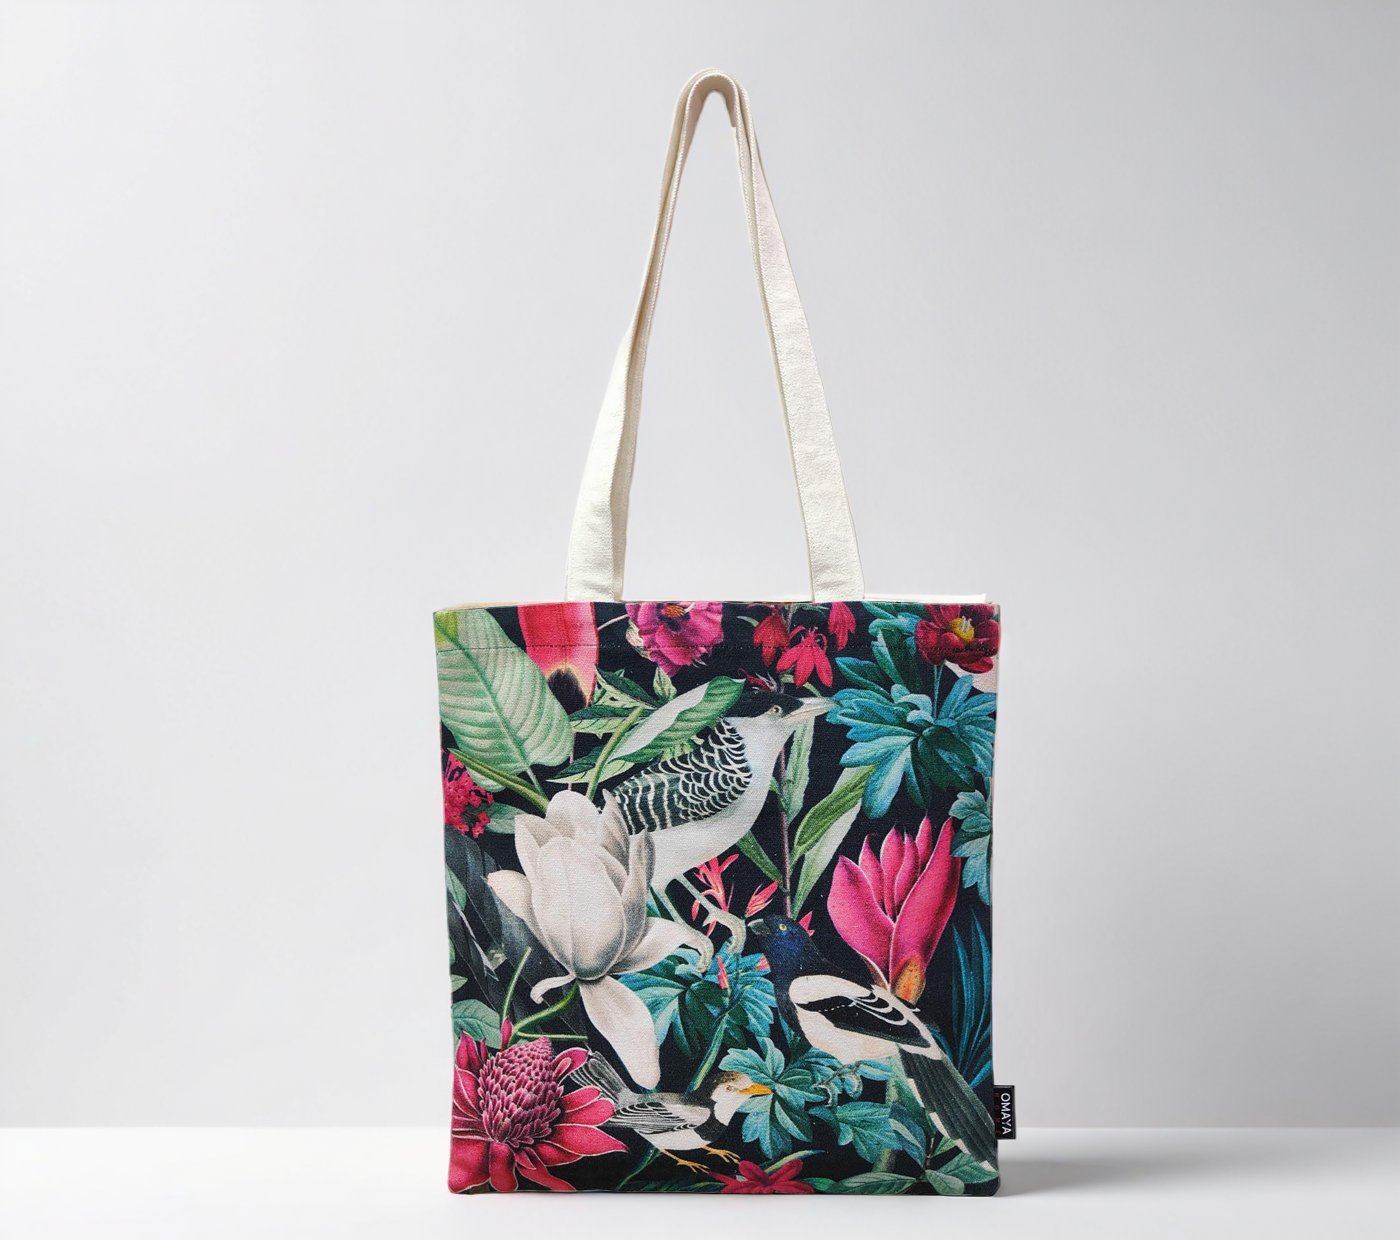 Printed Floral birds Cotton Canvas Tote Bag 34×36 Cms